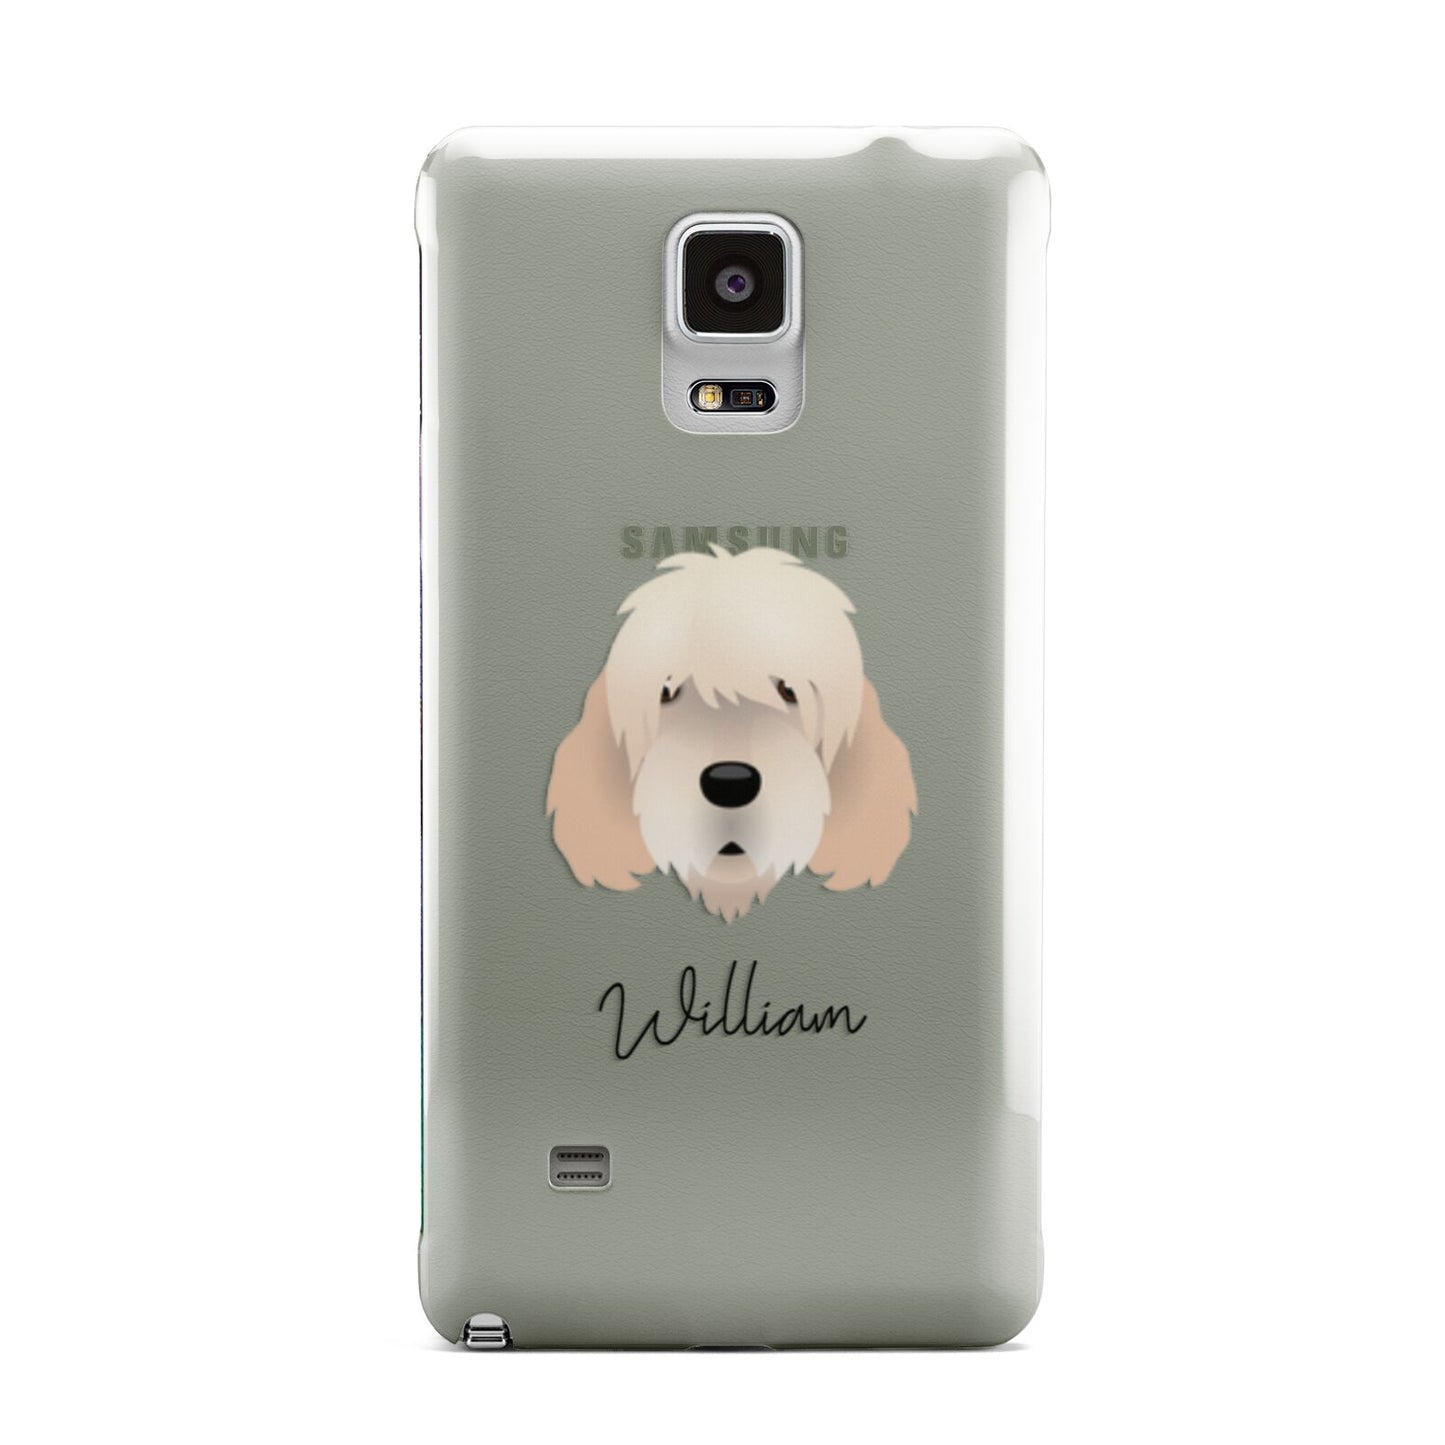 Otterhound Personalised Samsung Galaxy Note 4 Case